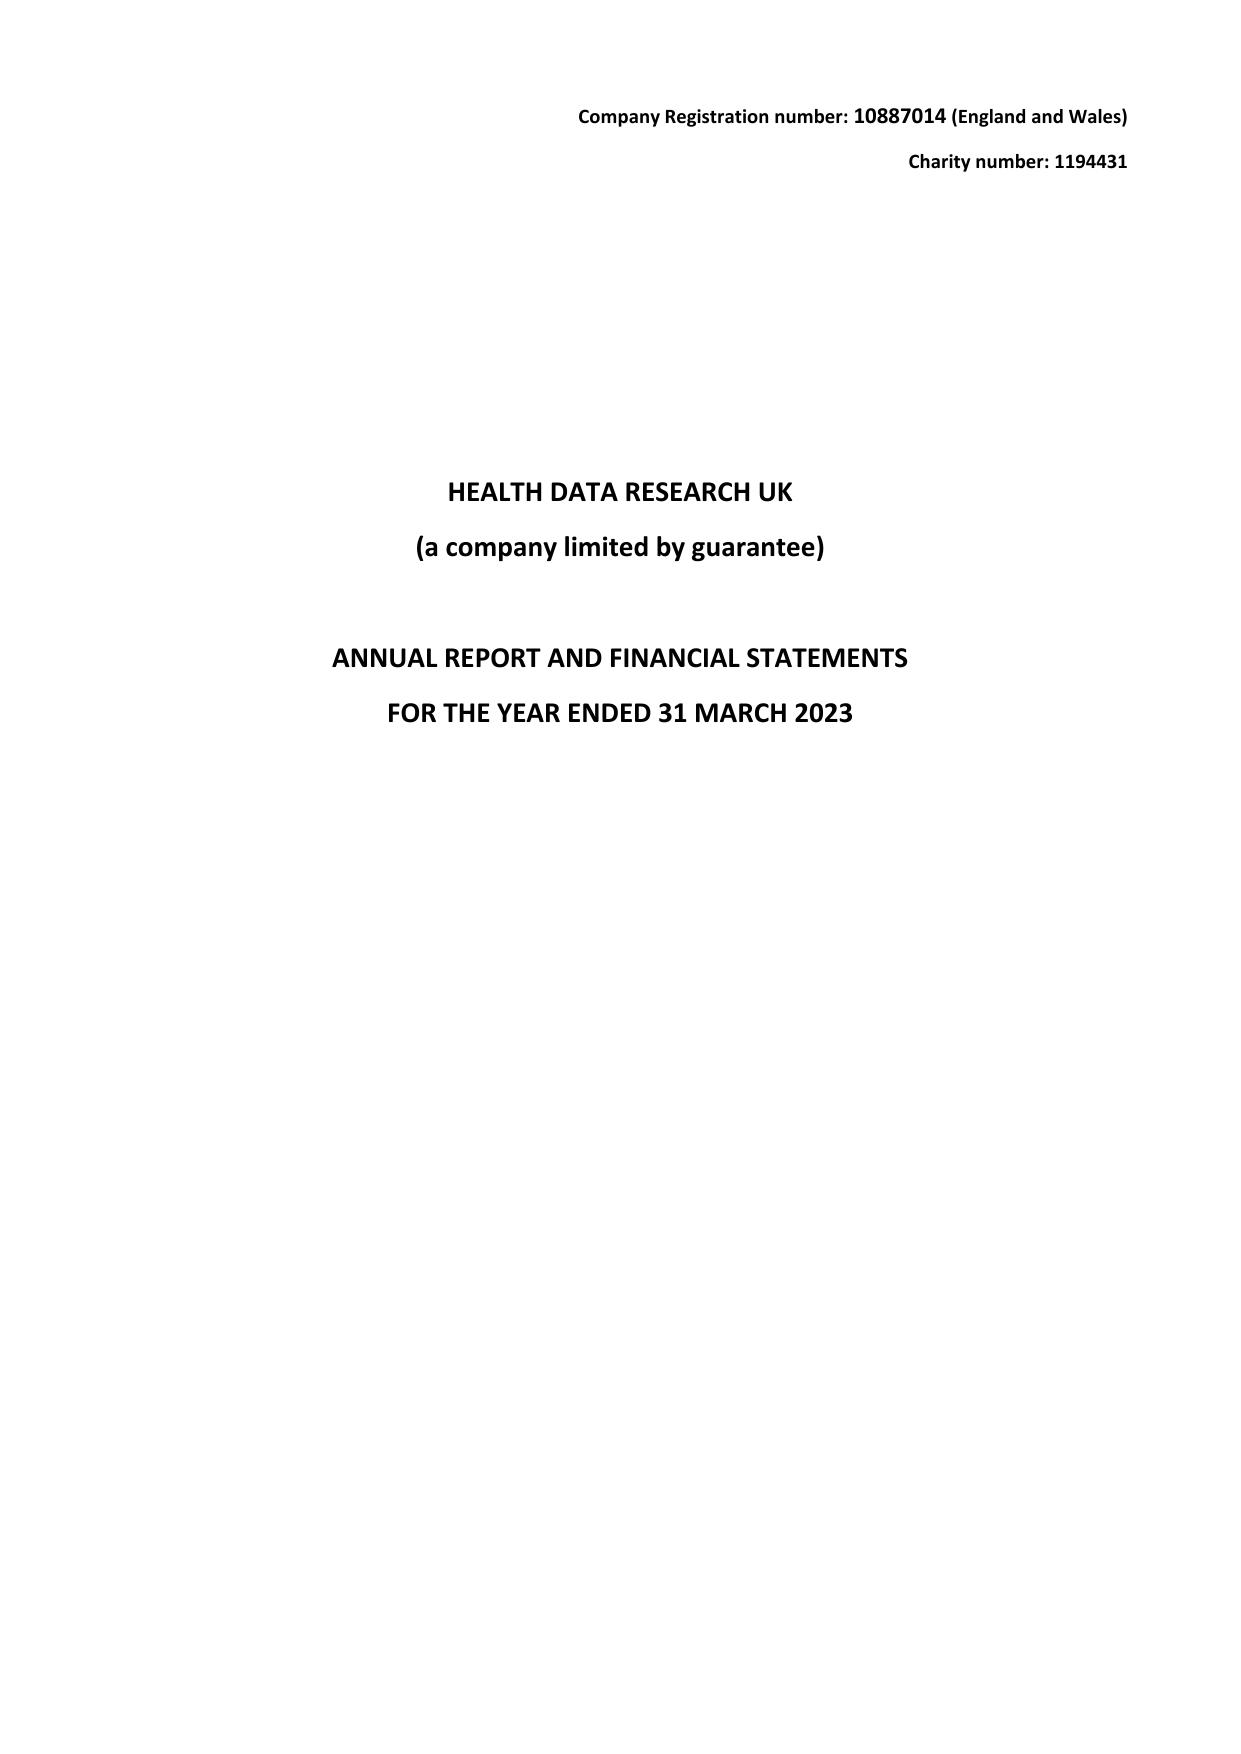 HDRUK 2024 Annual Report